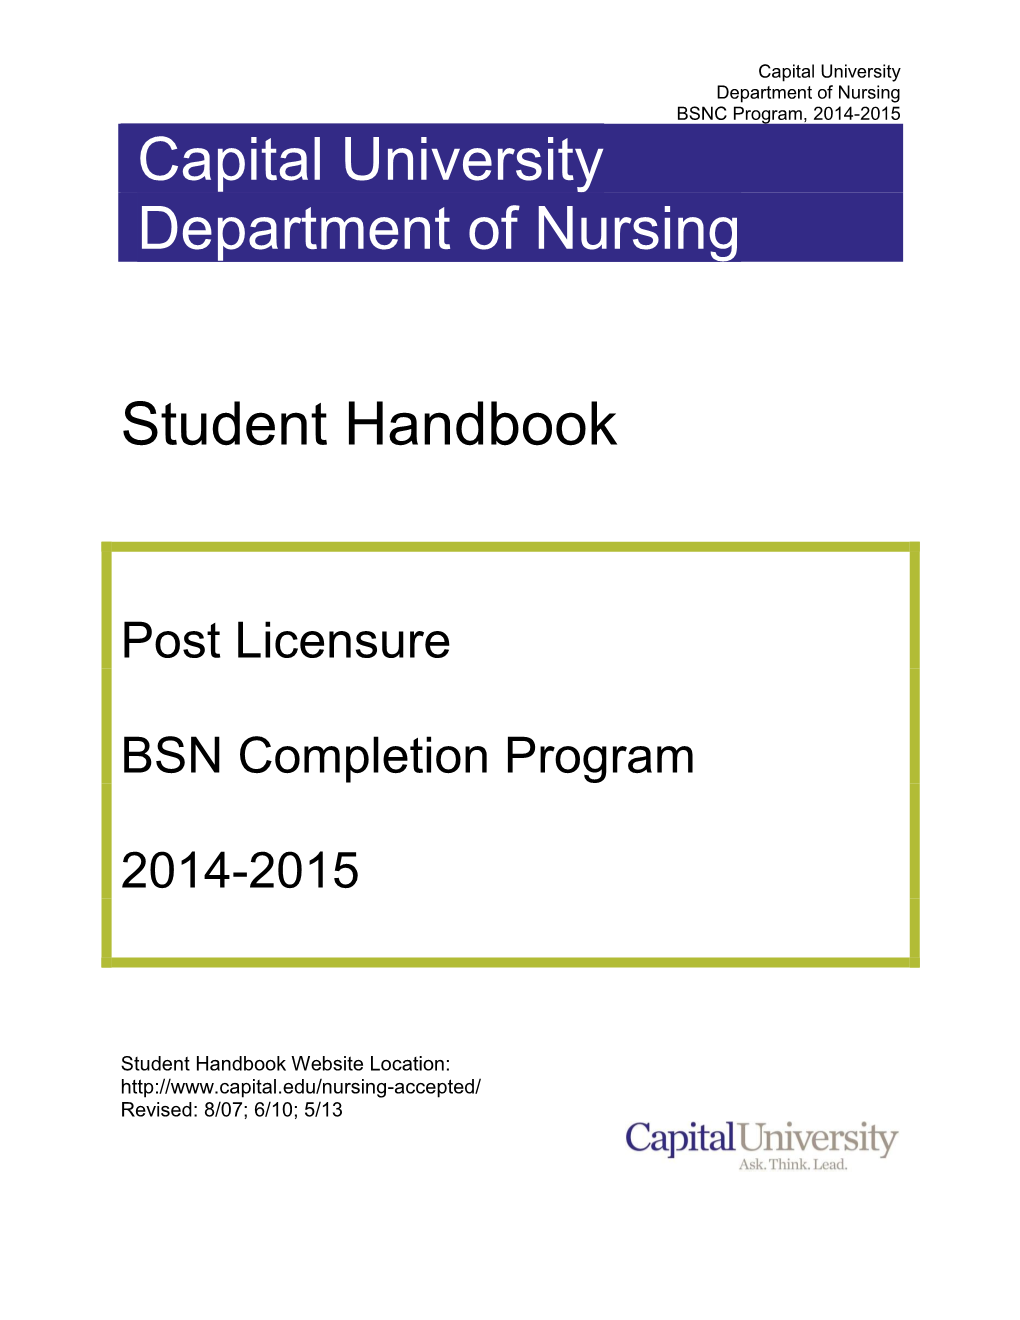 Capital University Department of Nursing Student Handbook